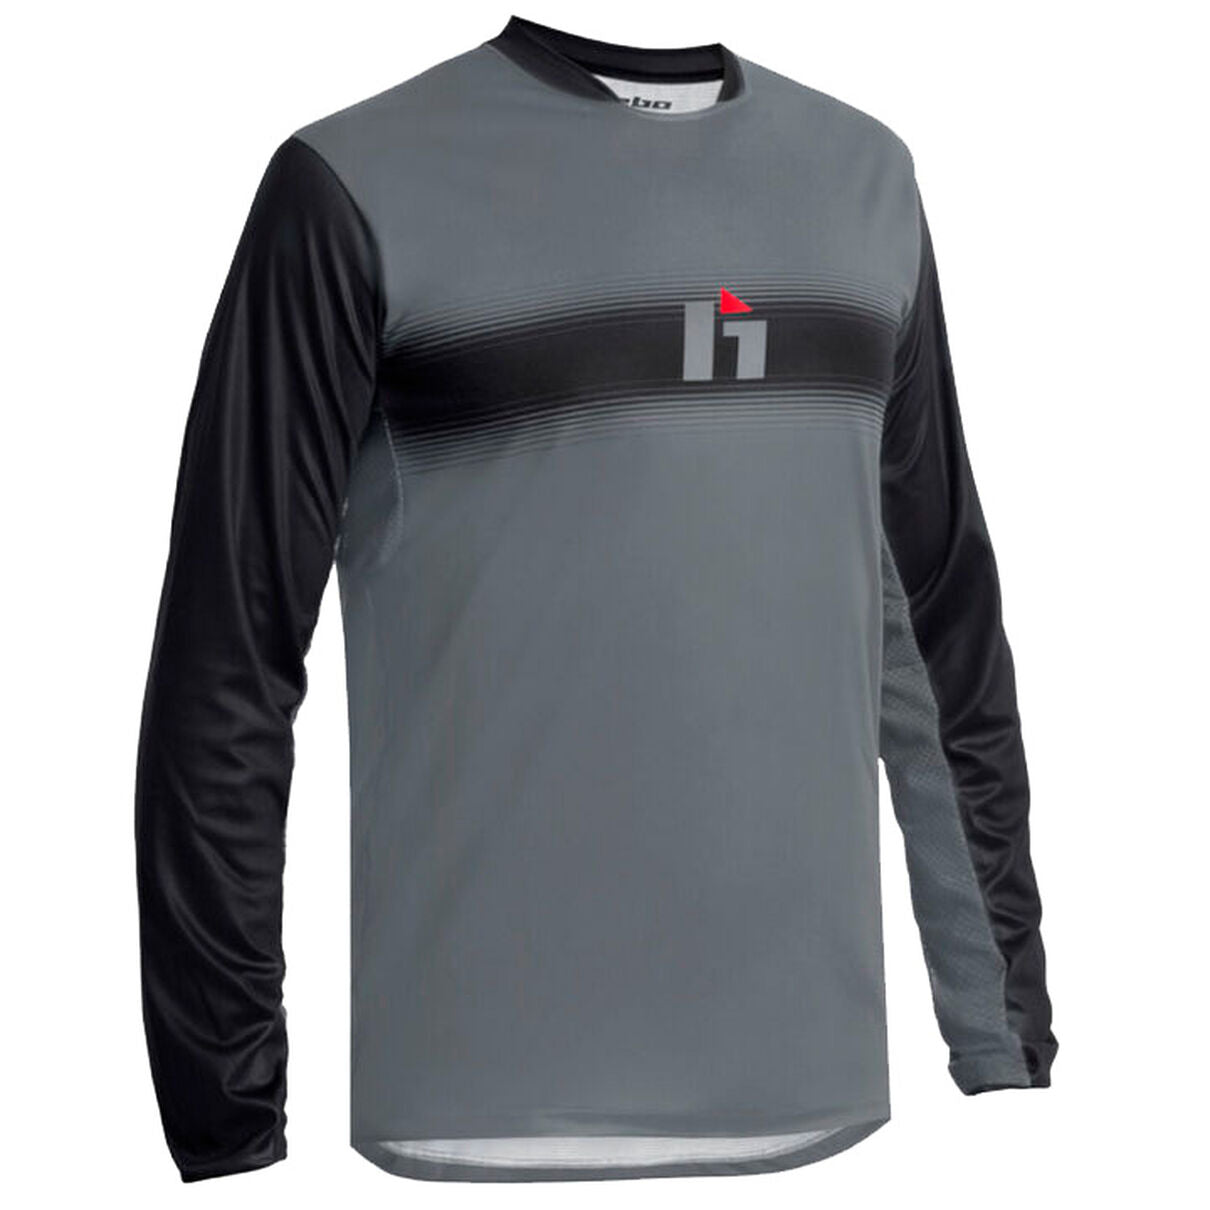 Hebo Trials Shirt Tech Grey